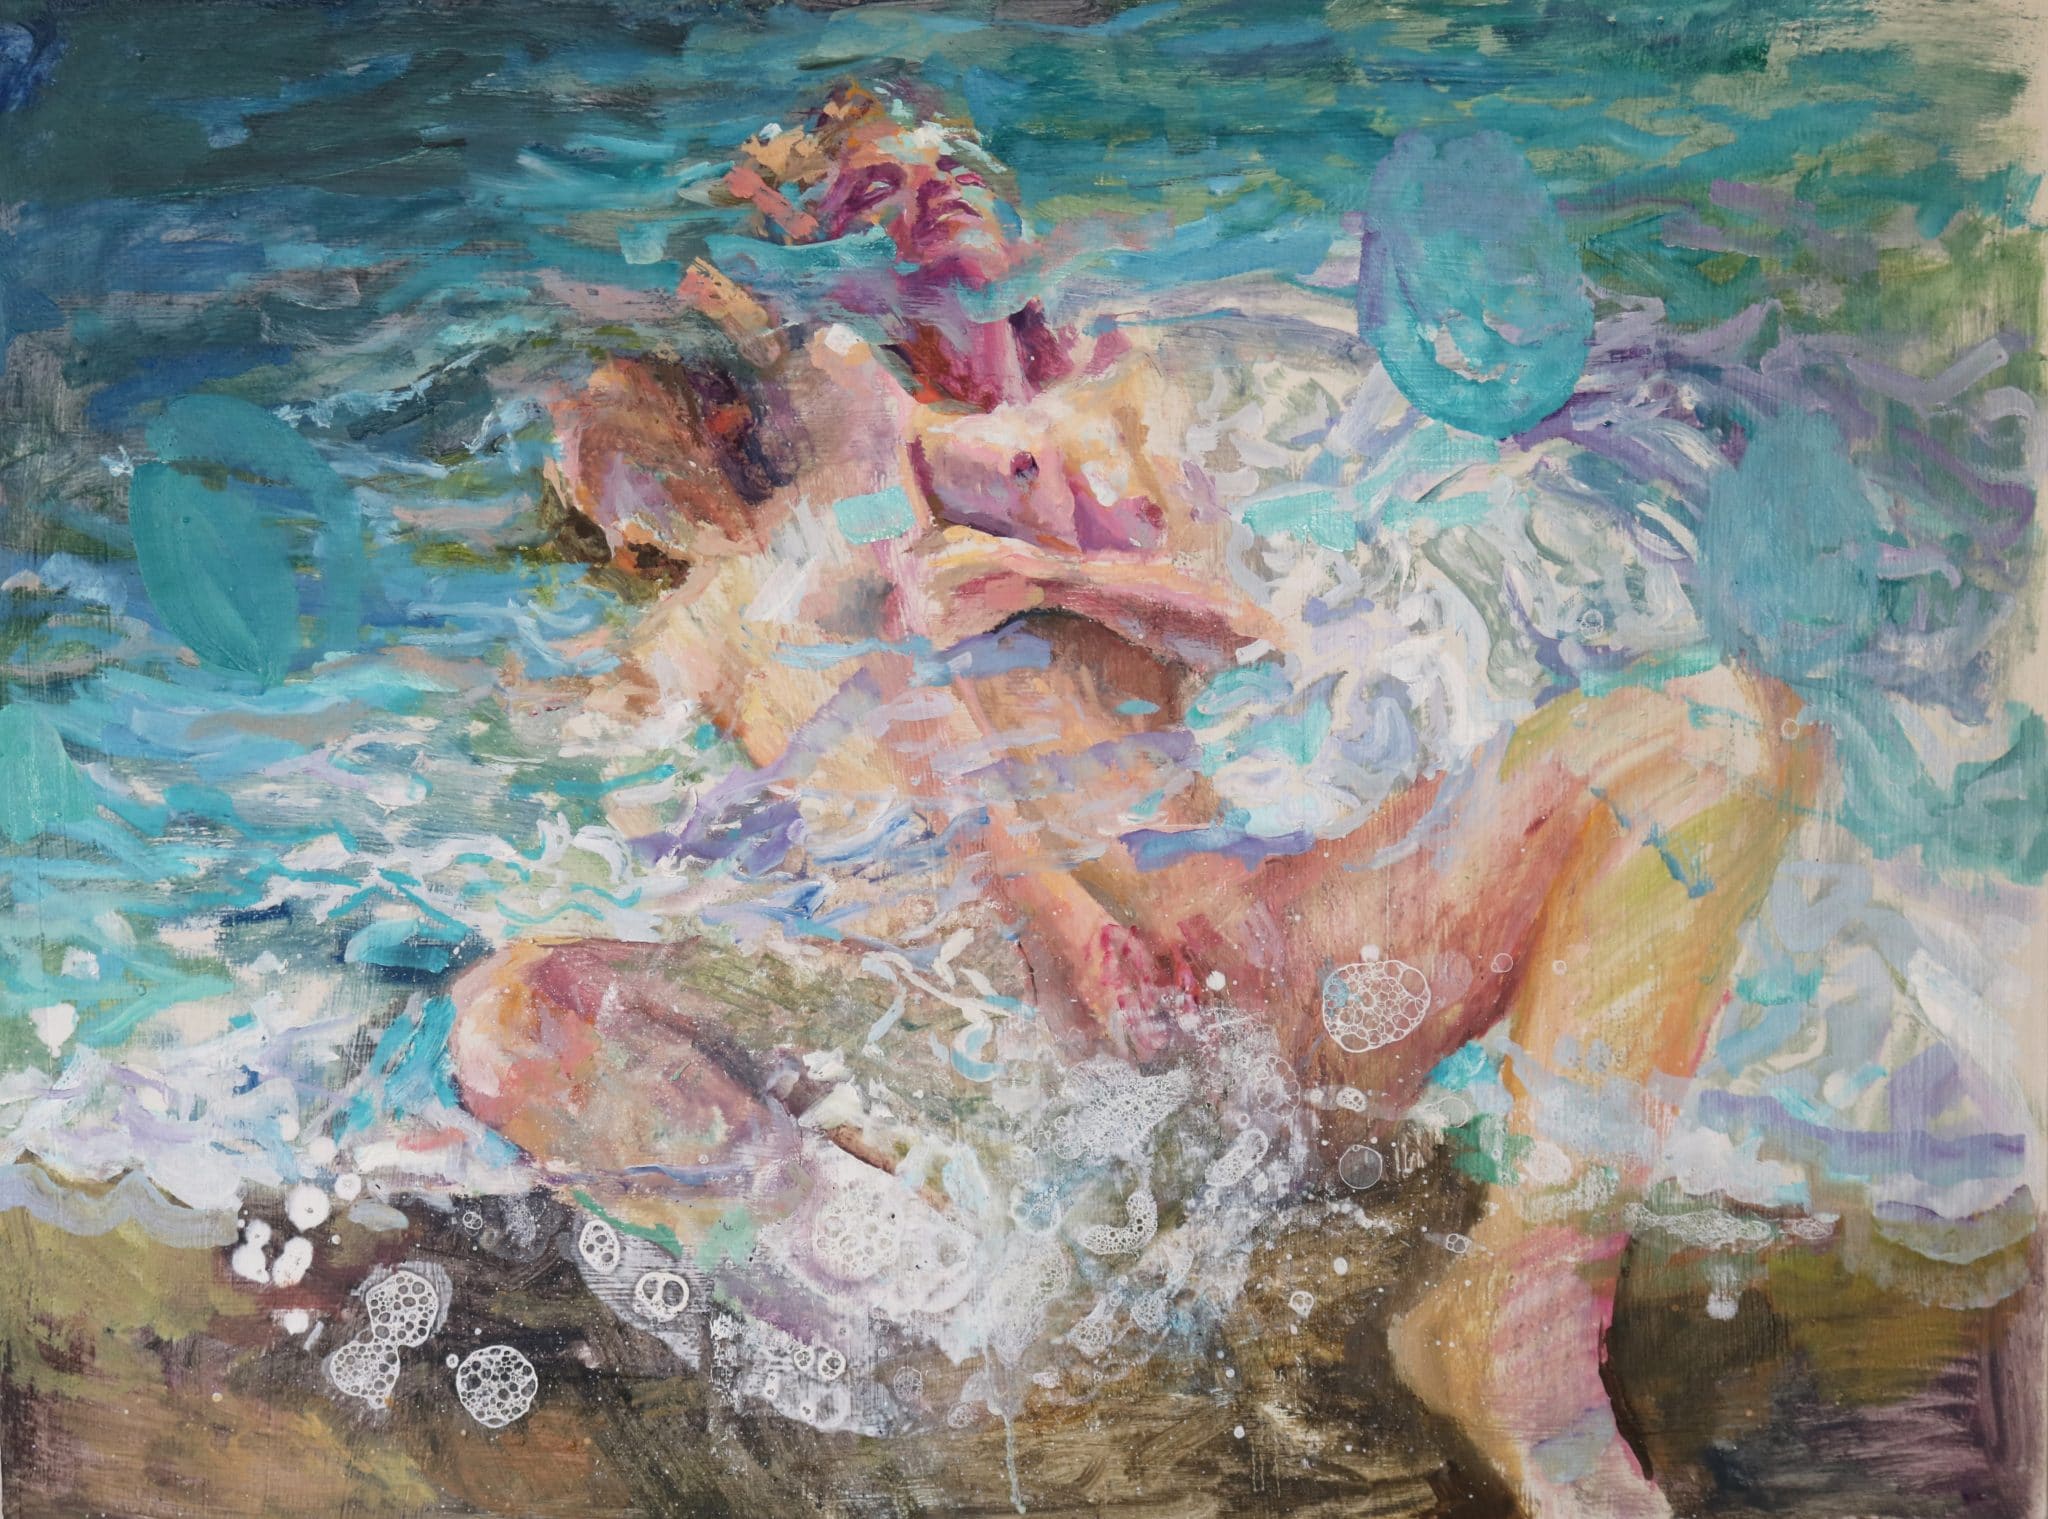 Taste of the ocean oil on canvas 60x80cm 2021 scaled painting, Styliana Katsiari